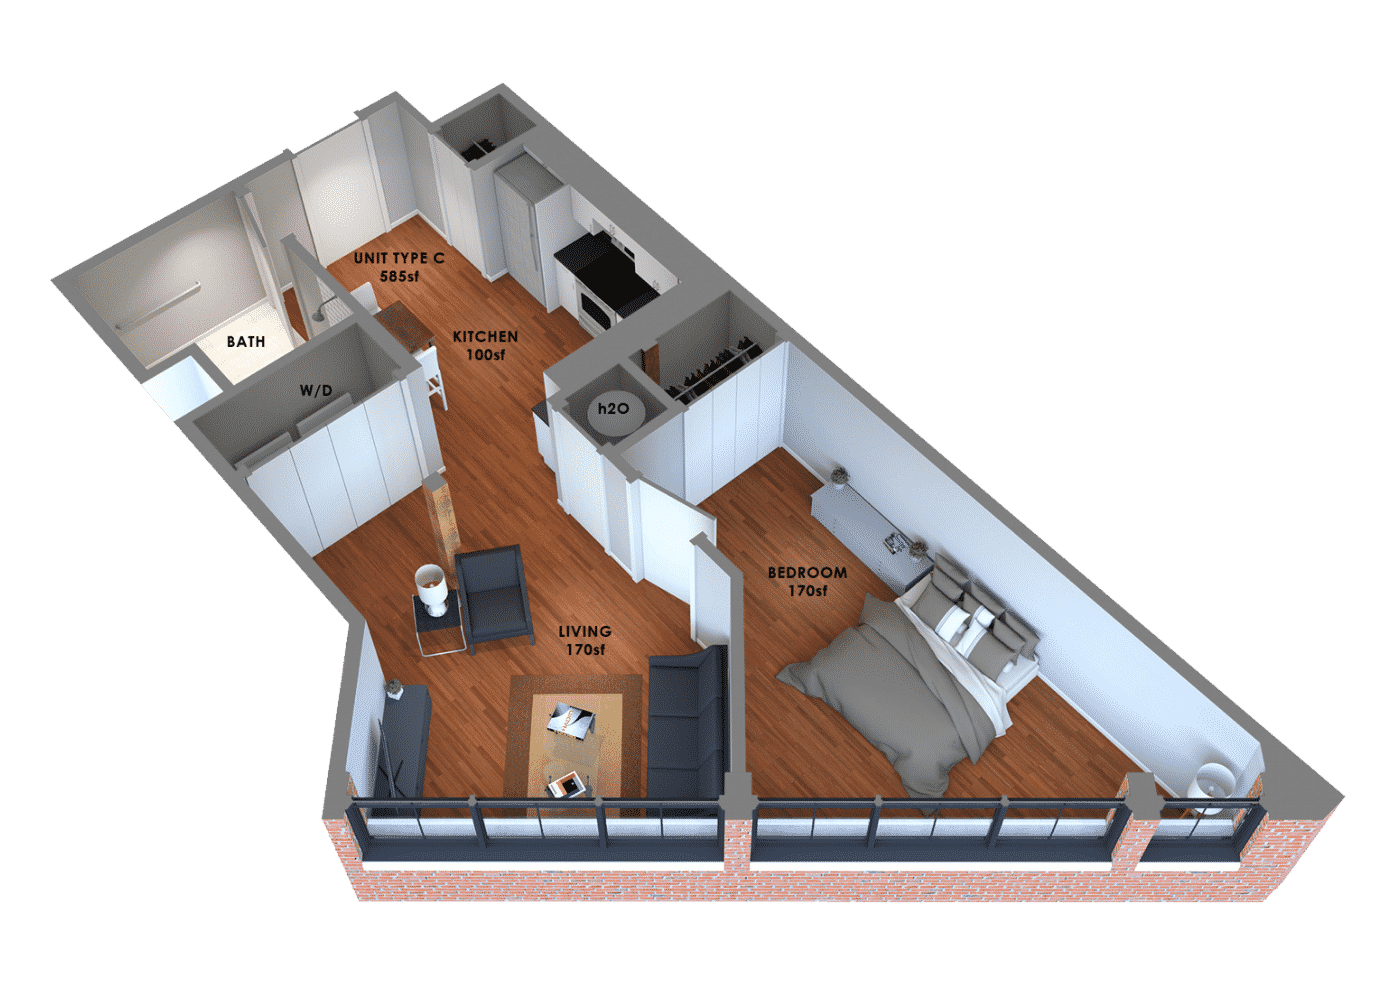 95 Lofts 1 bedroom 585 square feet